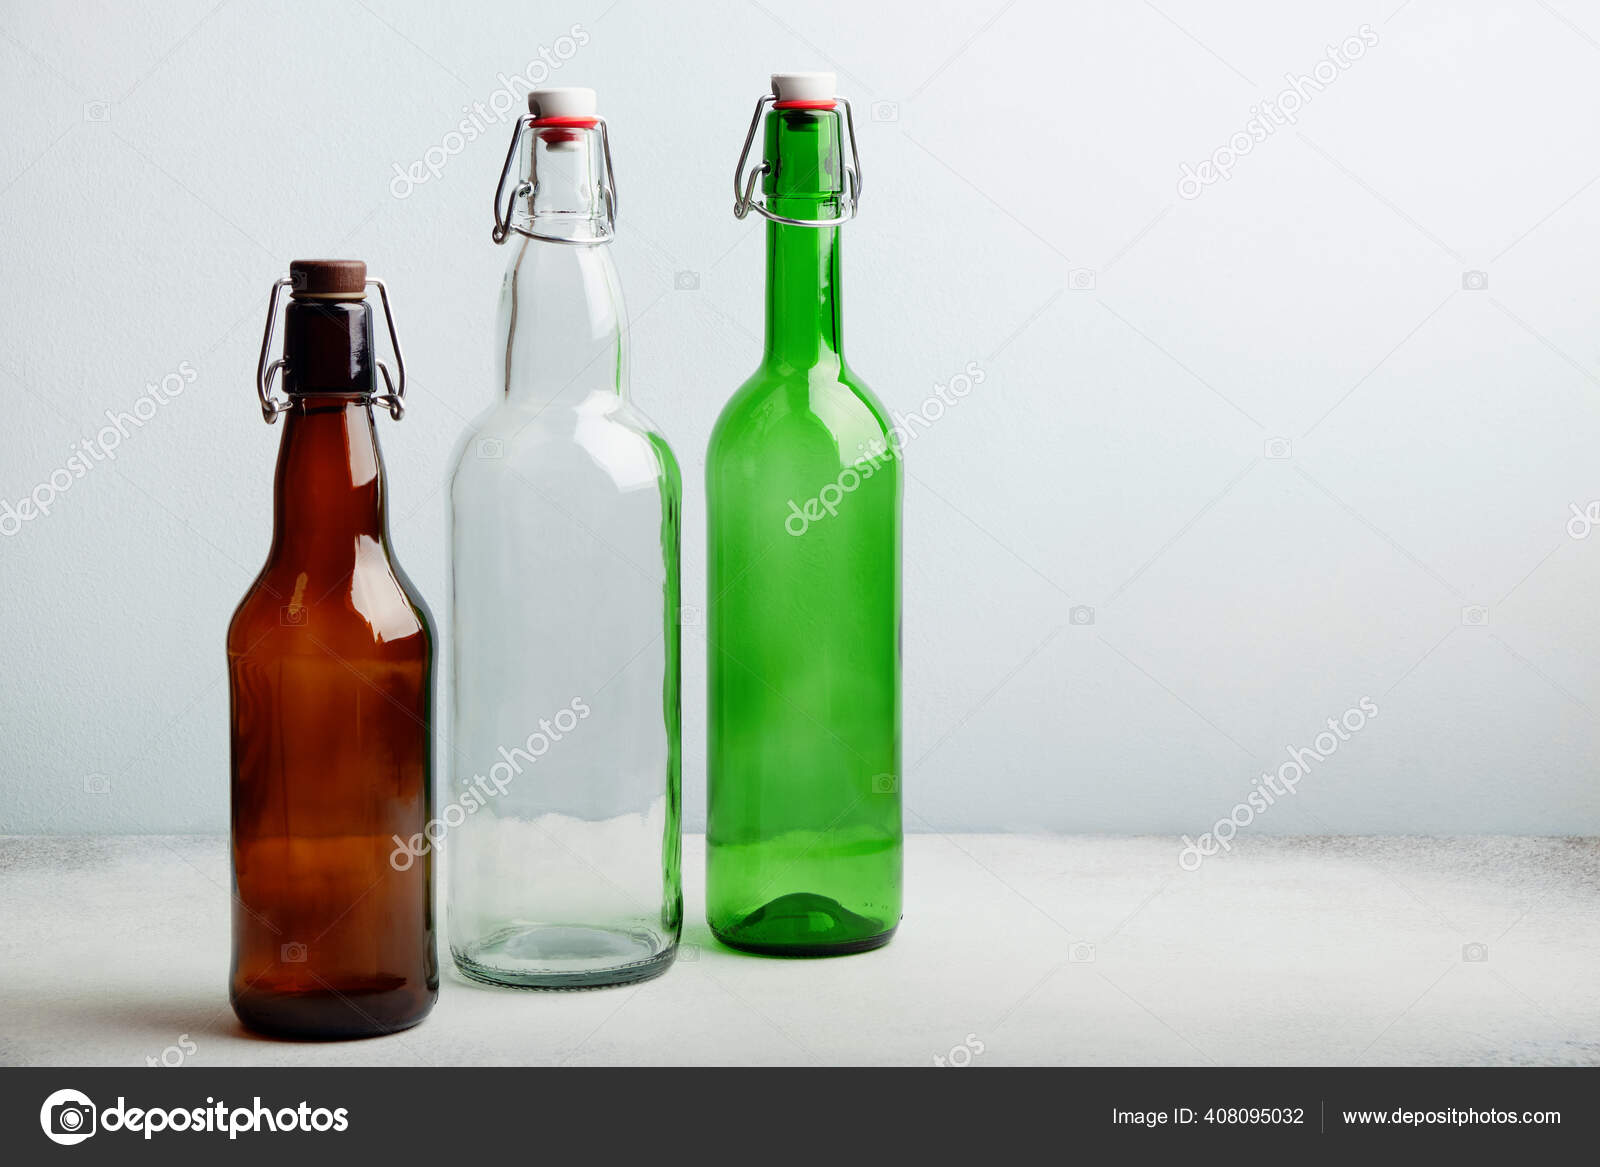 https://st4.depositphotos.com/13378770/40809/i/1600/depositphotos_408095032-stock-photo-reusable-glass-bottles-table-sustainable.jpg